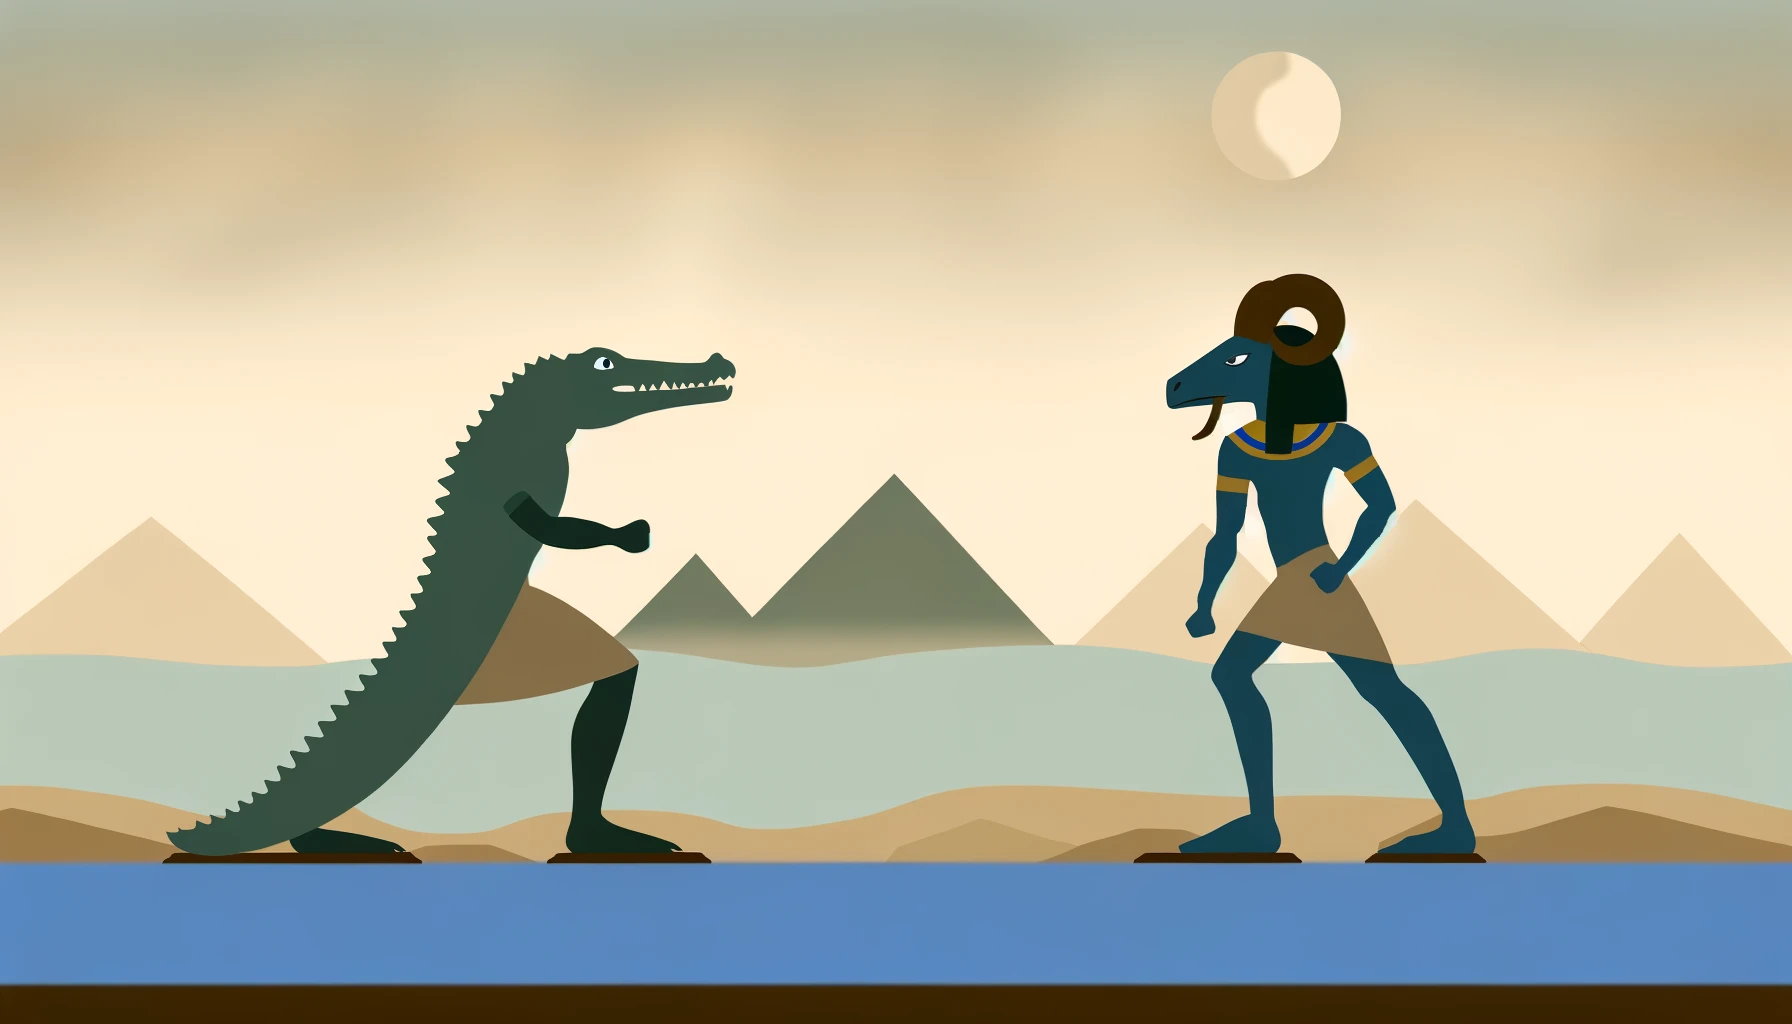 Sobek vs Khnum: The Crocodile God vs the Creator God